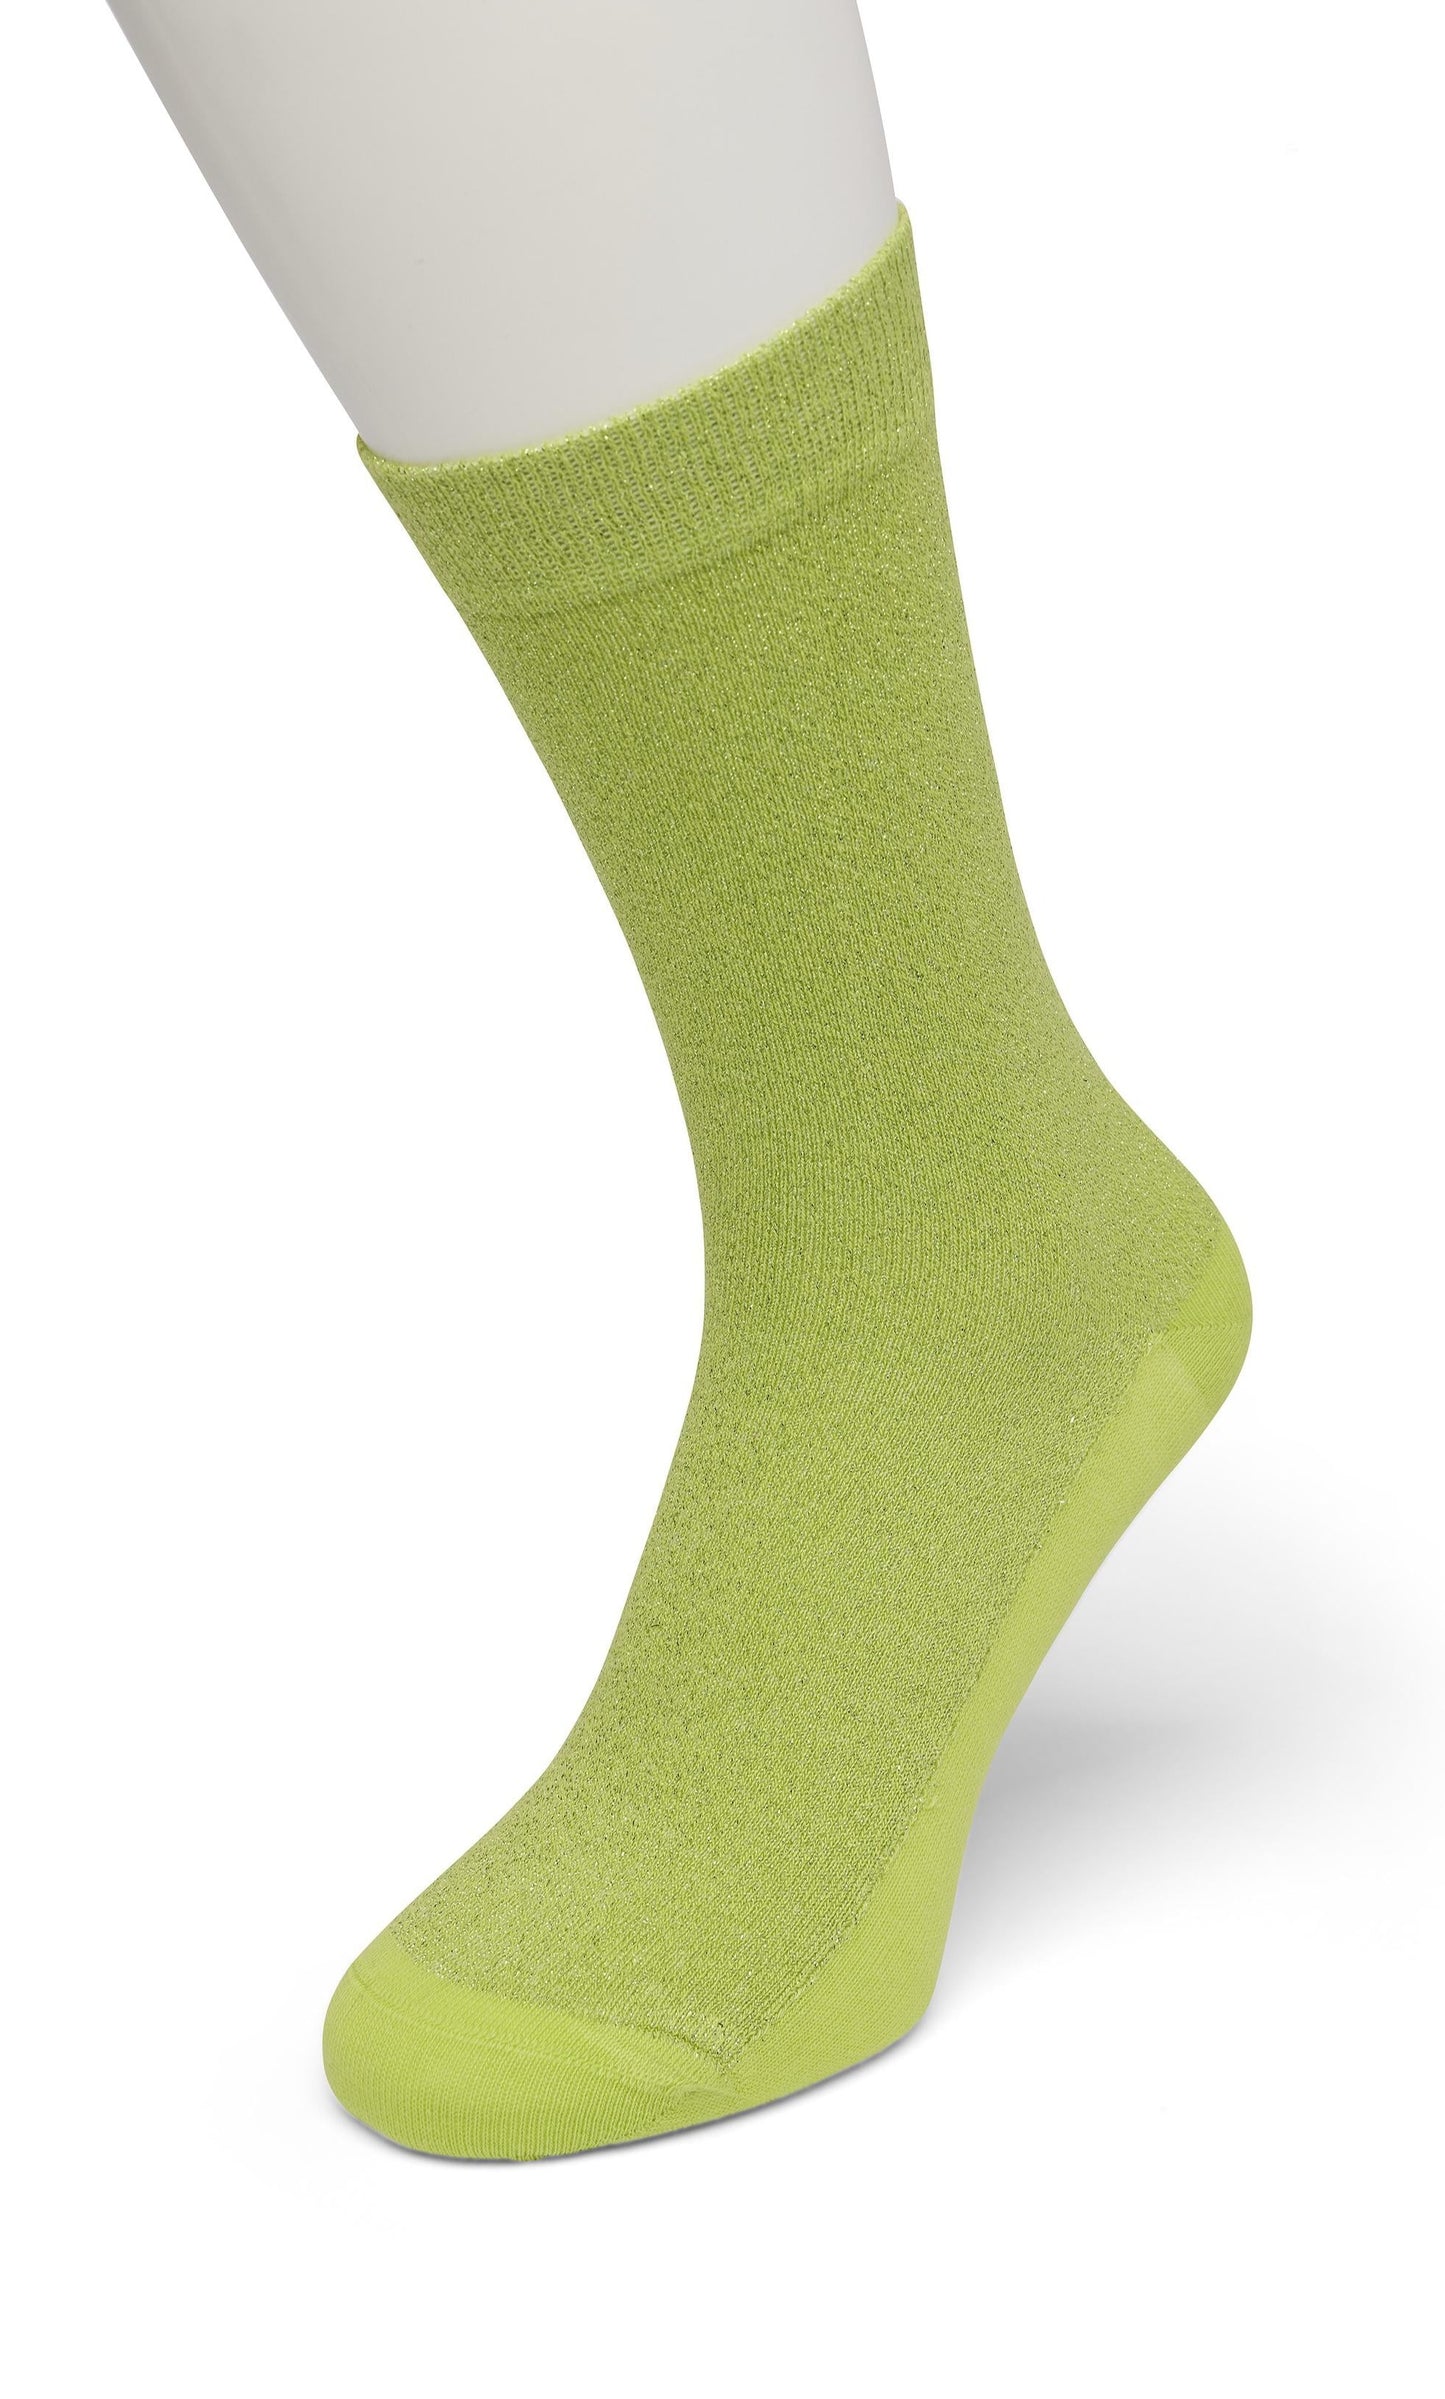 Bonnie Doon BP051138 Cotton Sparkle Socks - lime green socks with sparkly glitter lam̩ lurex